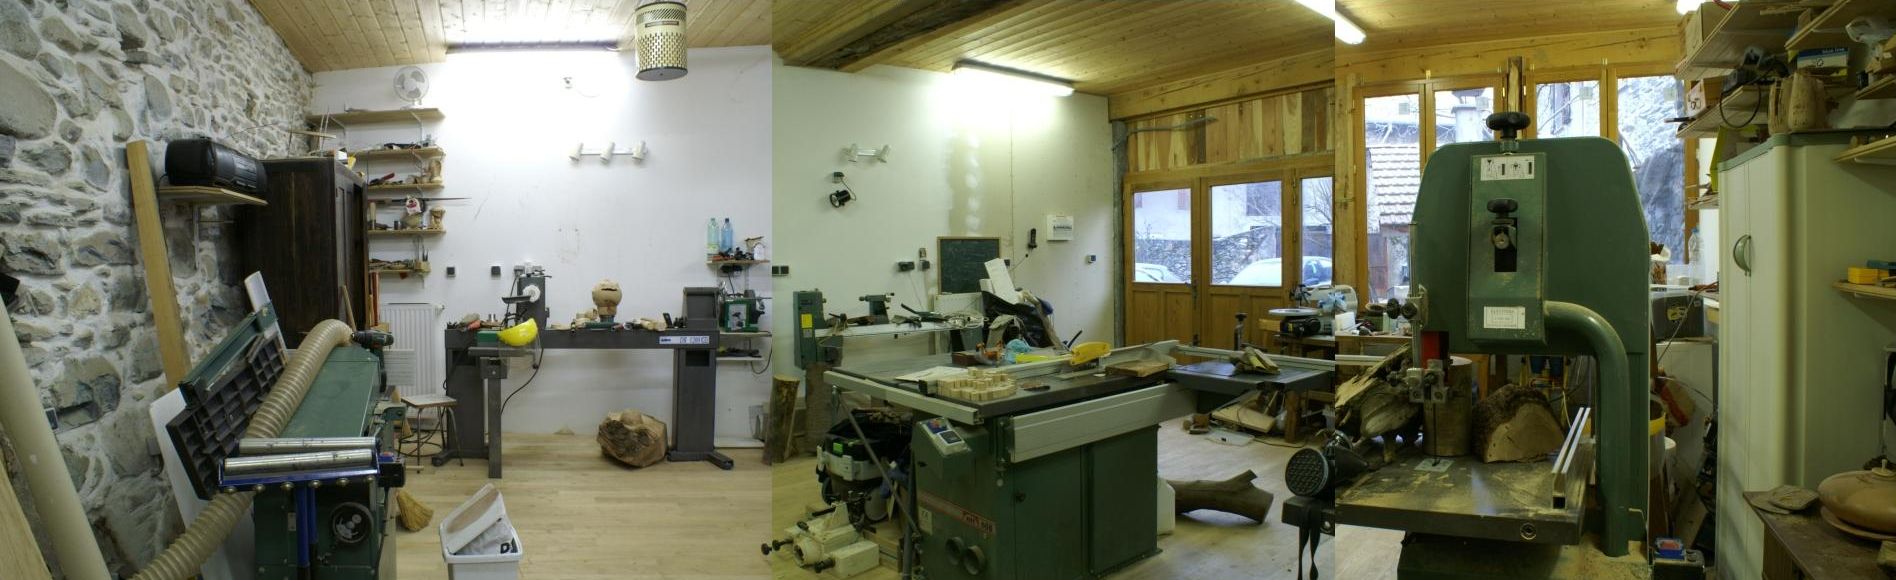 my workshop